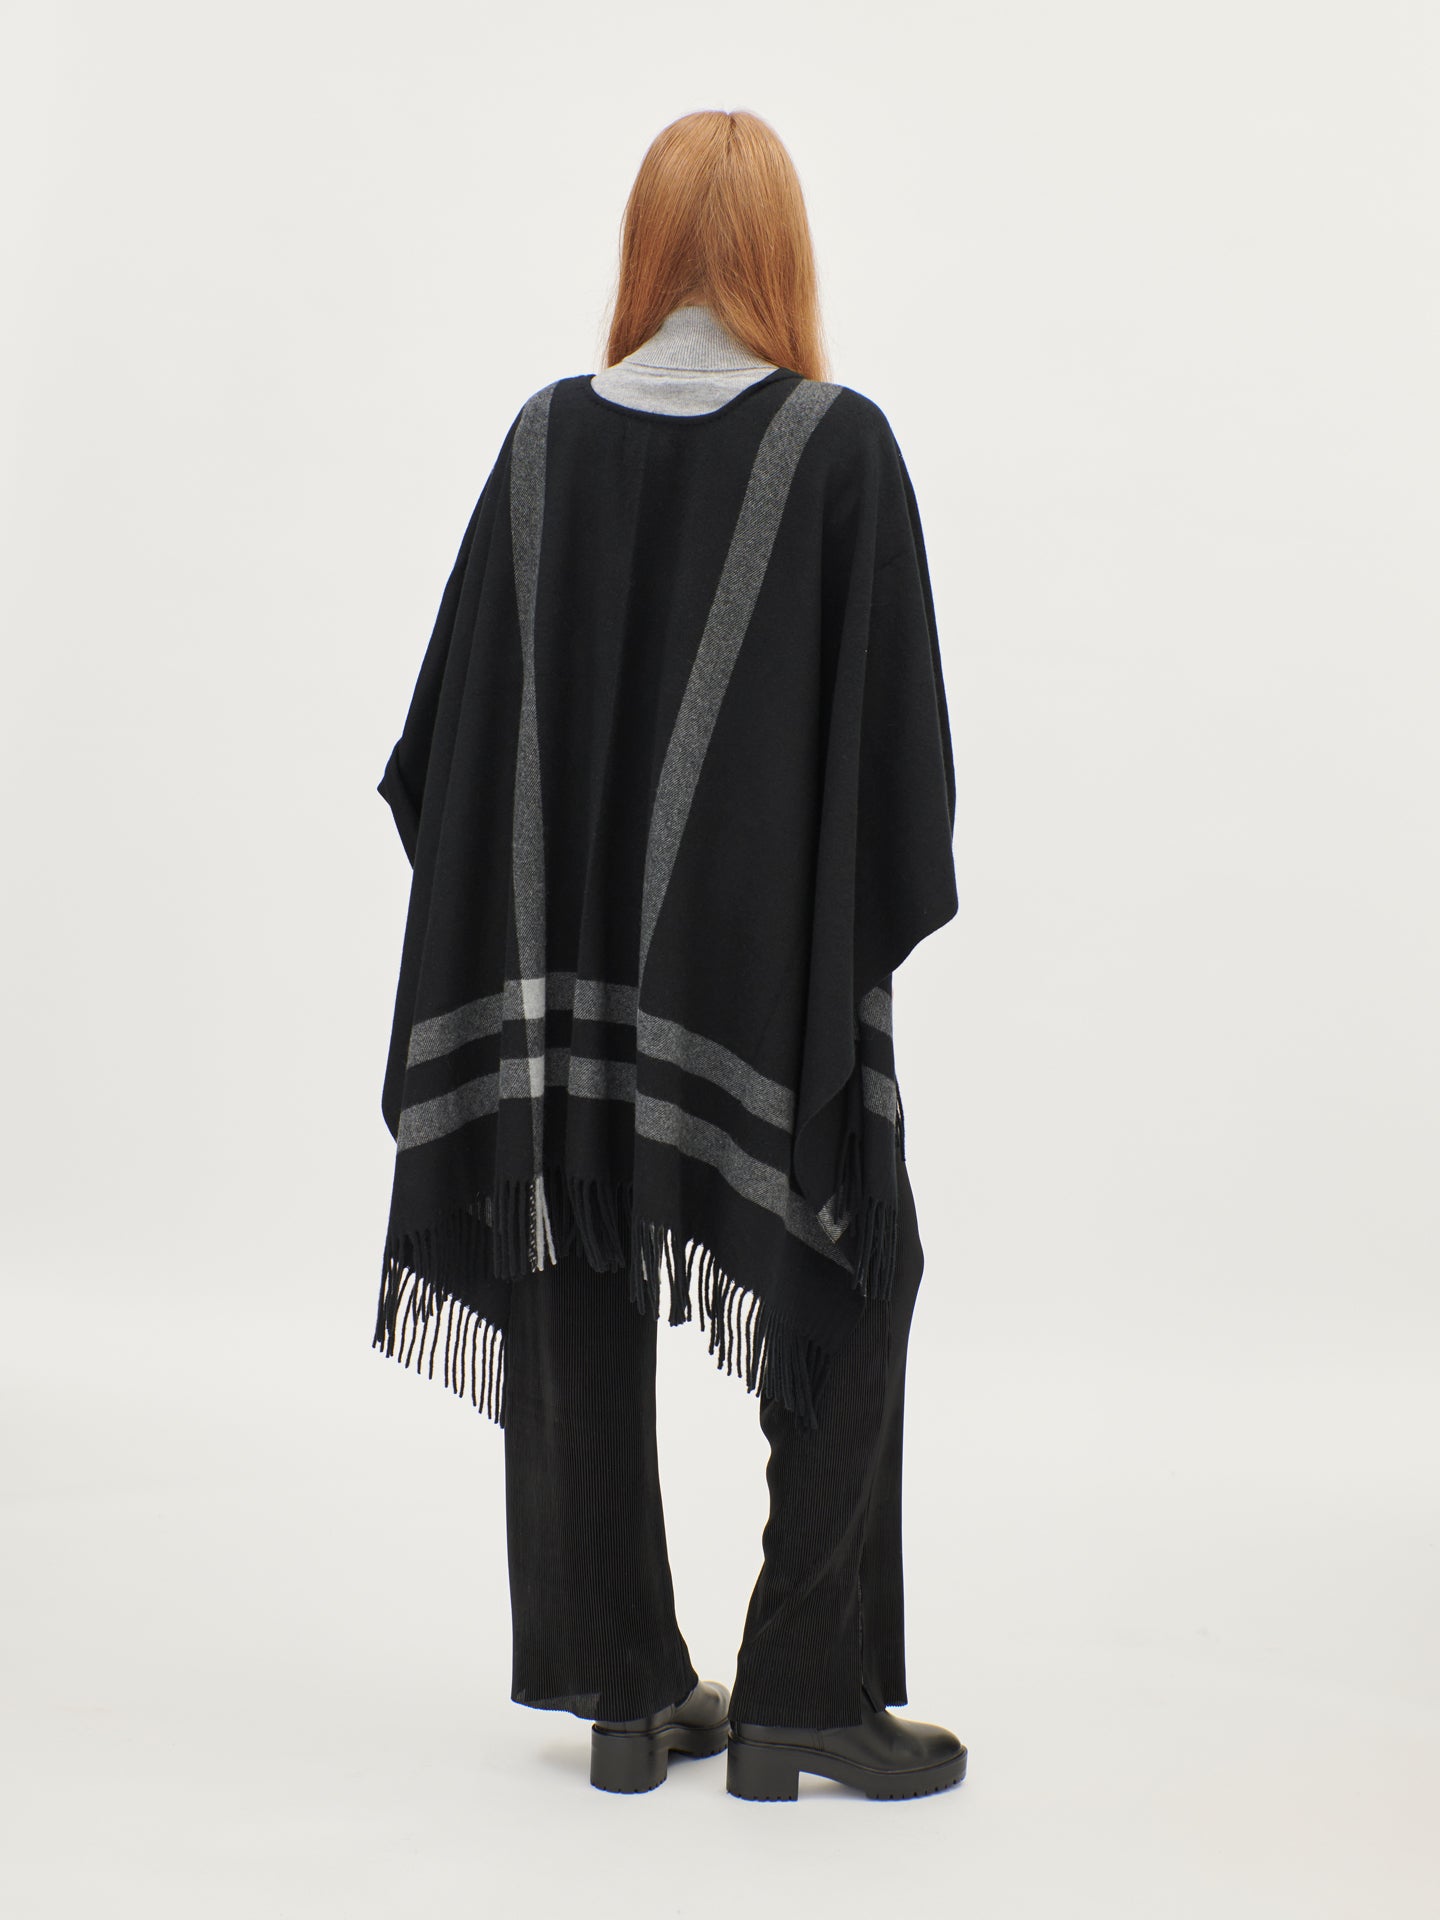 Women's Cashmere Double-Breasted Long Coat Black - Gobi Cashmere